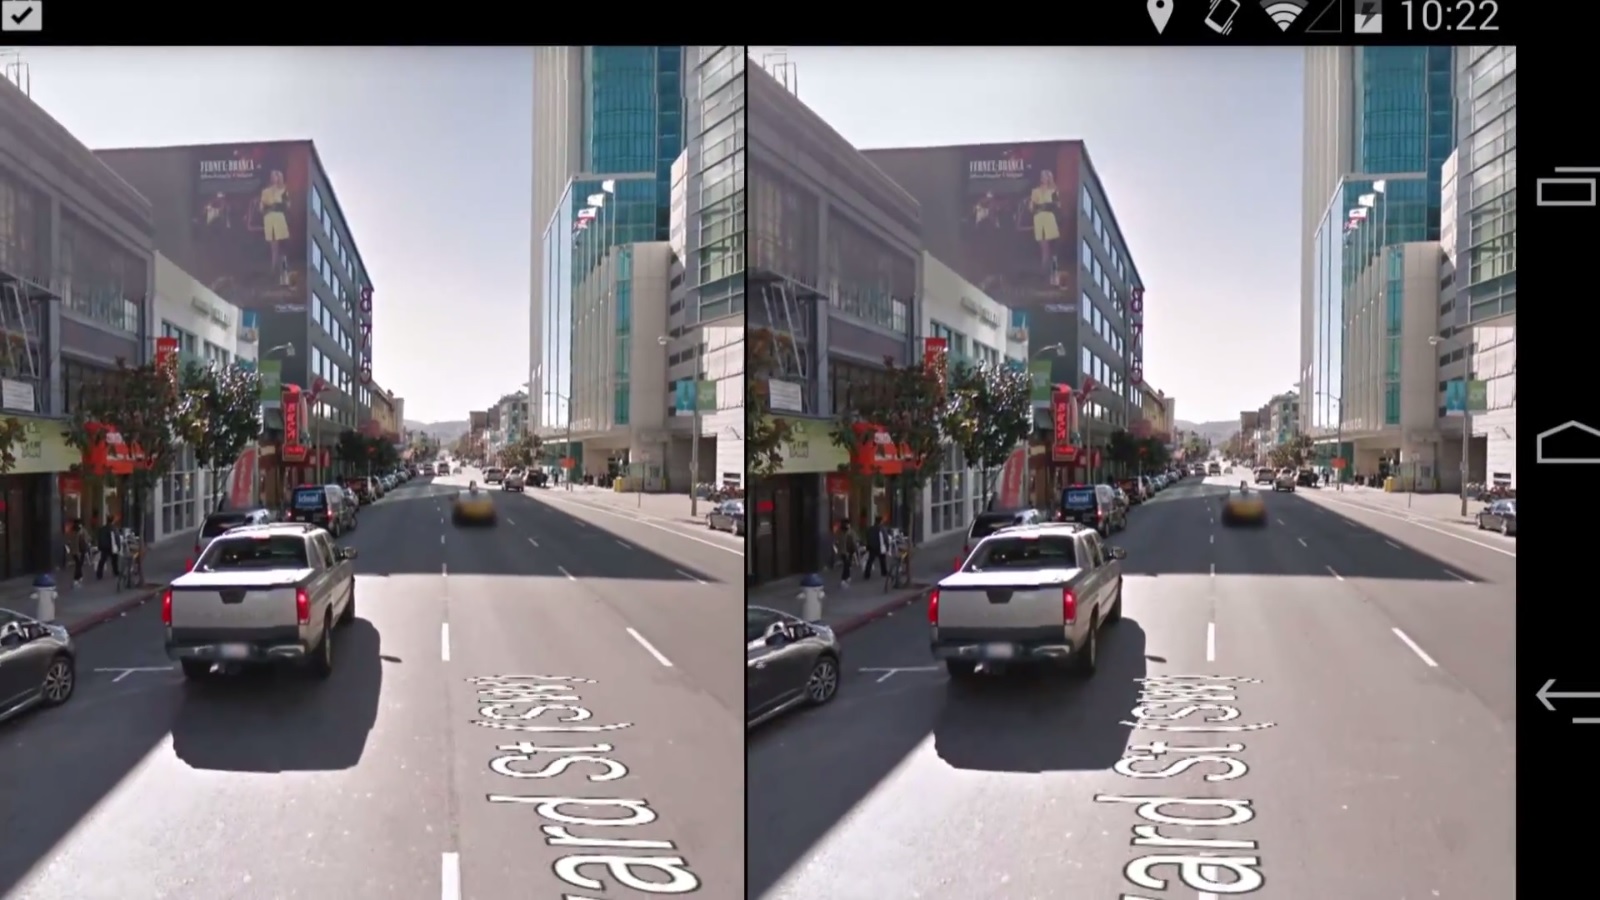 Is Google Maps a Virtual Reality?